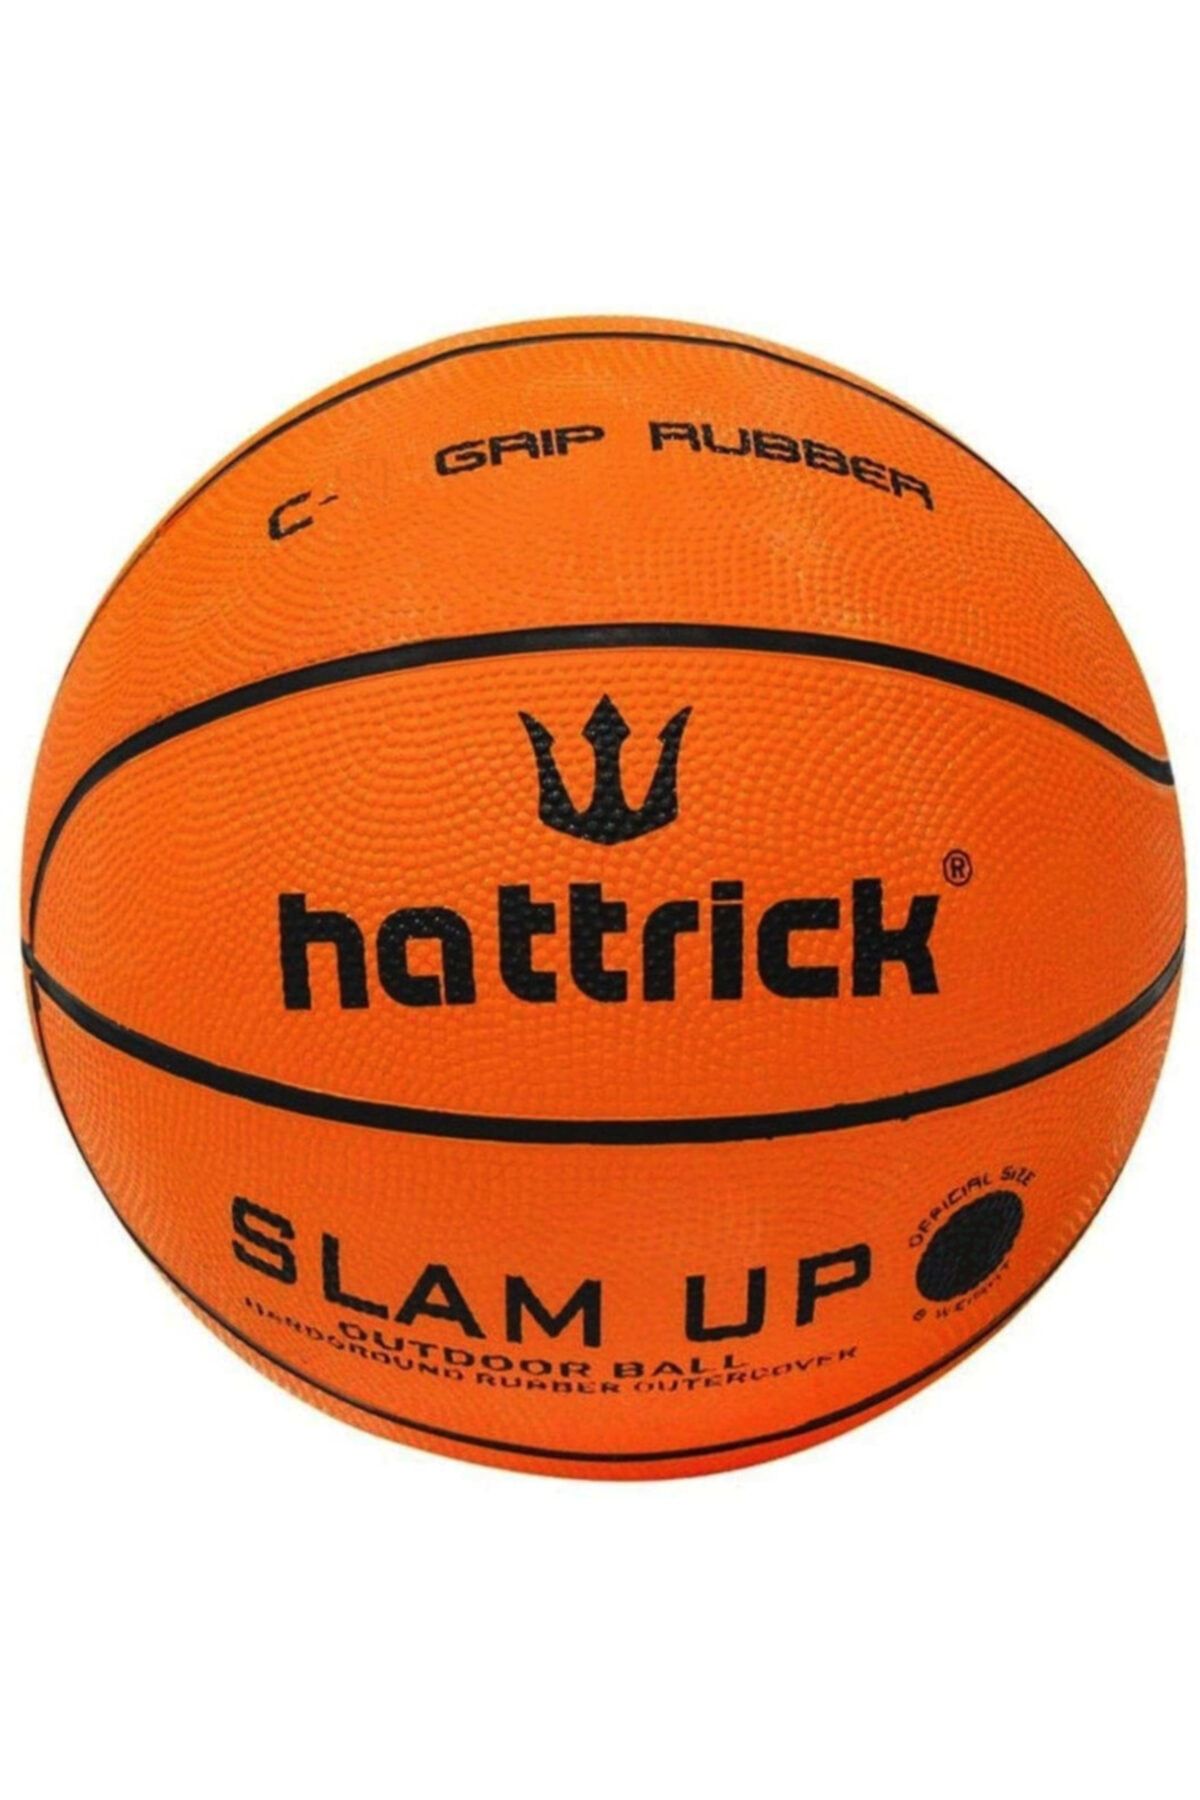 Hattrick C5 5 No Basketbol Topu Basket Topu